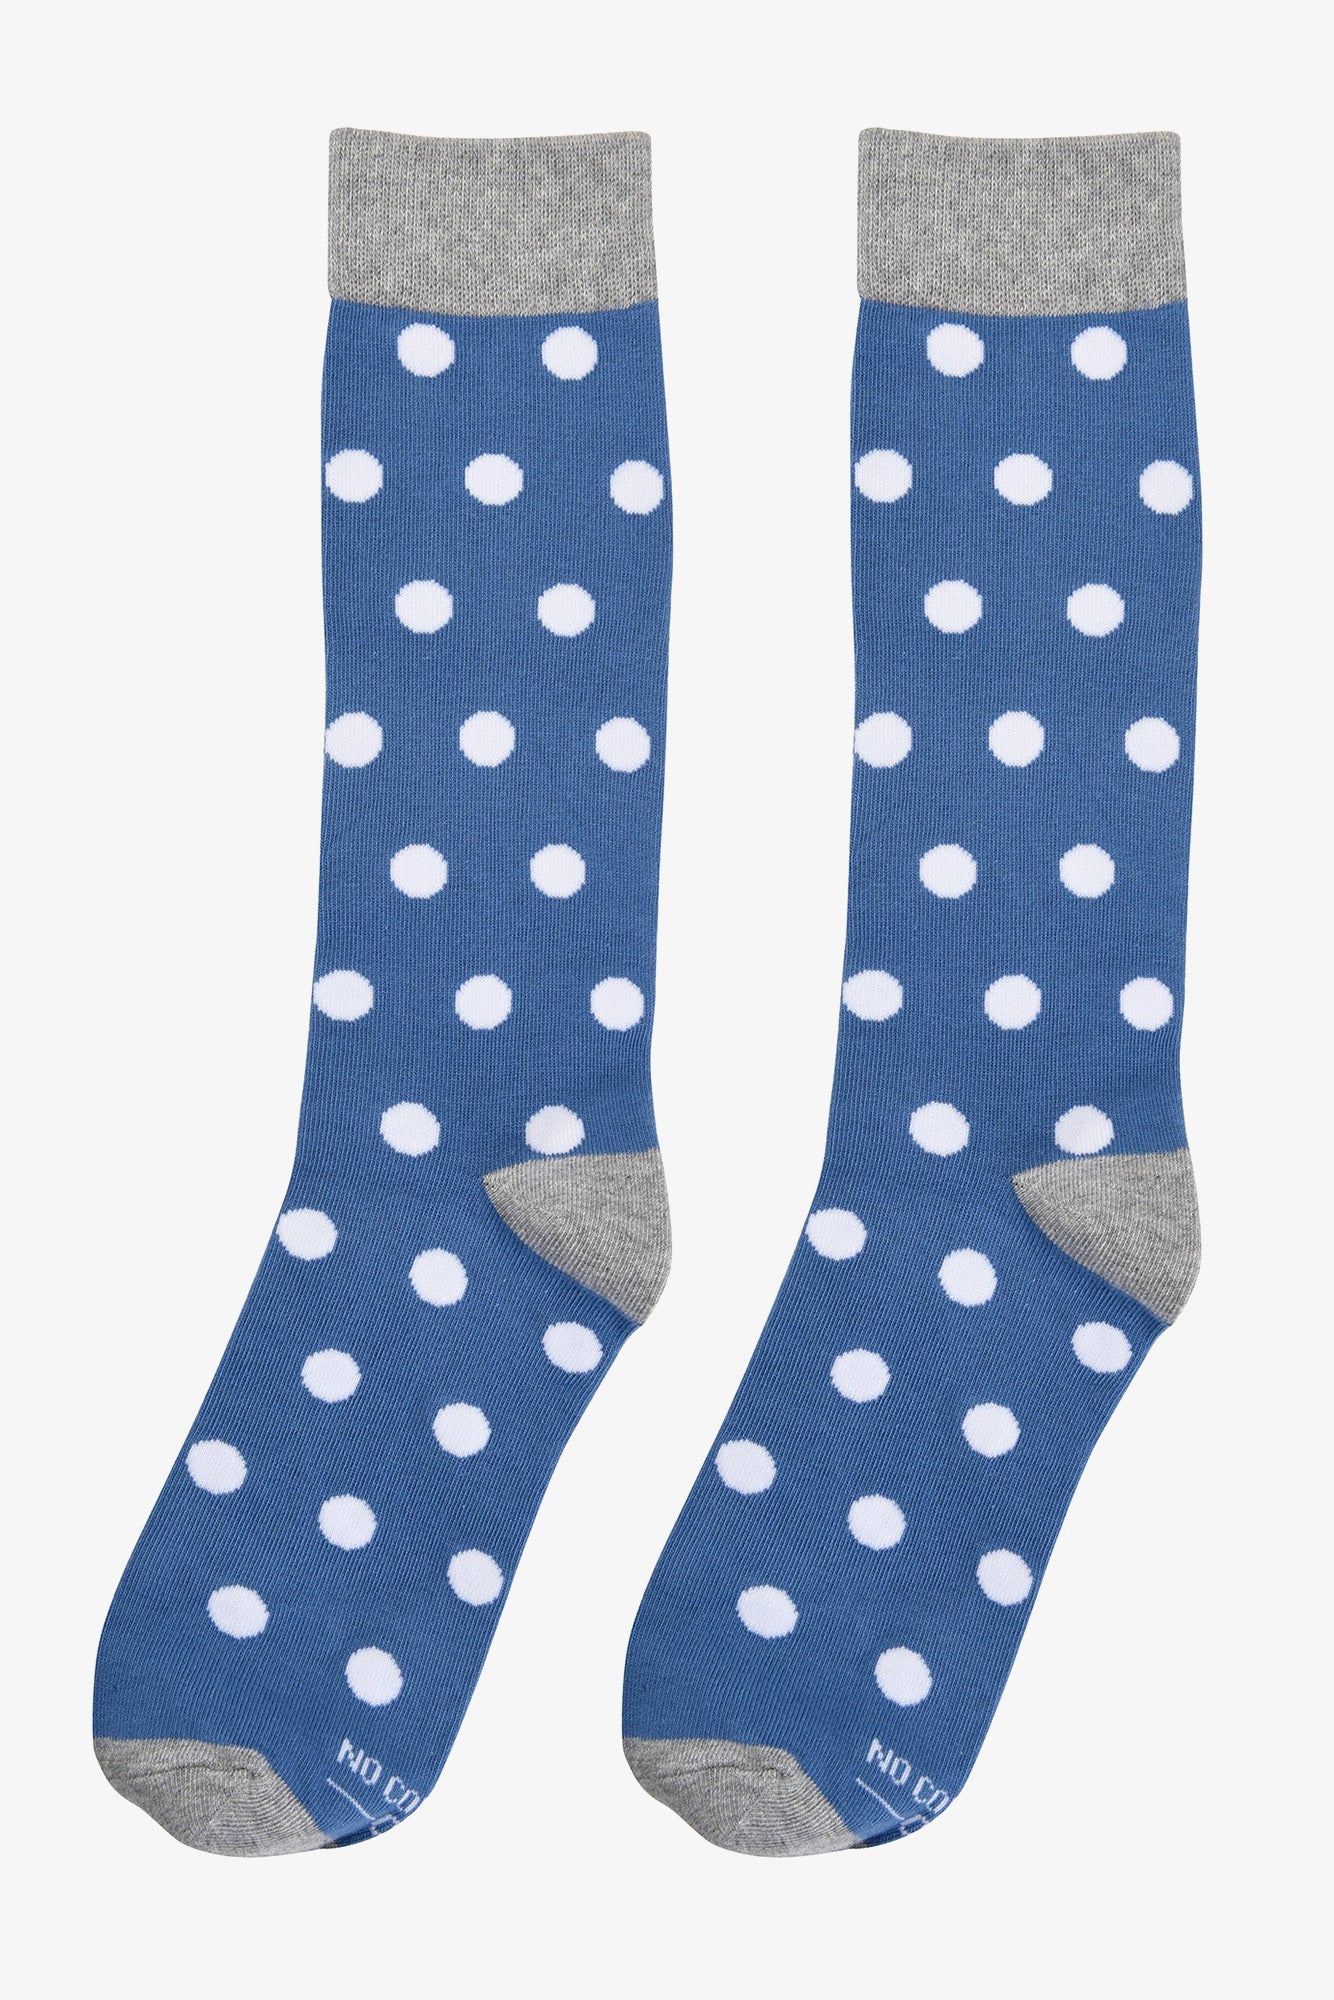 Polka Dot Groomsmen Socks By No Cold Feet - Steel Blue